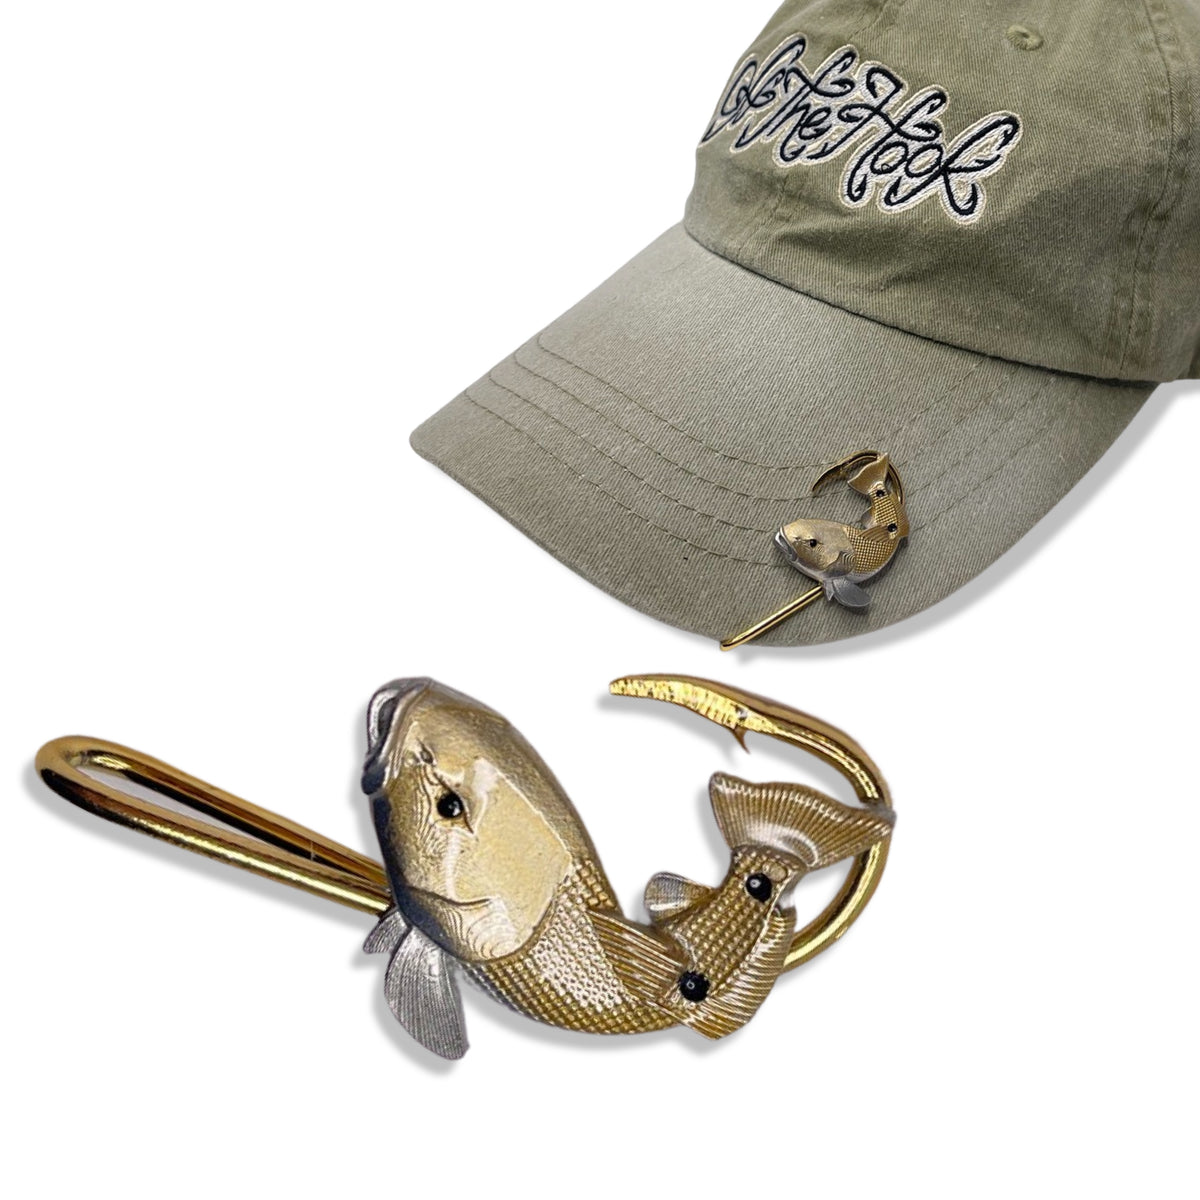 REDFISH HOOKIT© (turning #1) Hat Hook - Fishing Hat Clip -REDFISH Hat – Off  The Hook Jeweler